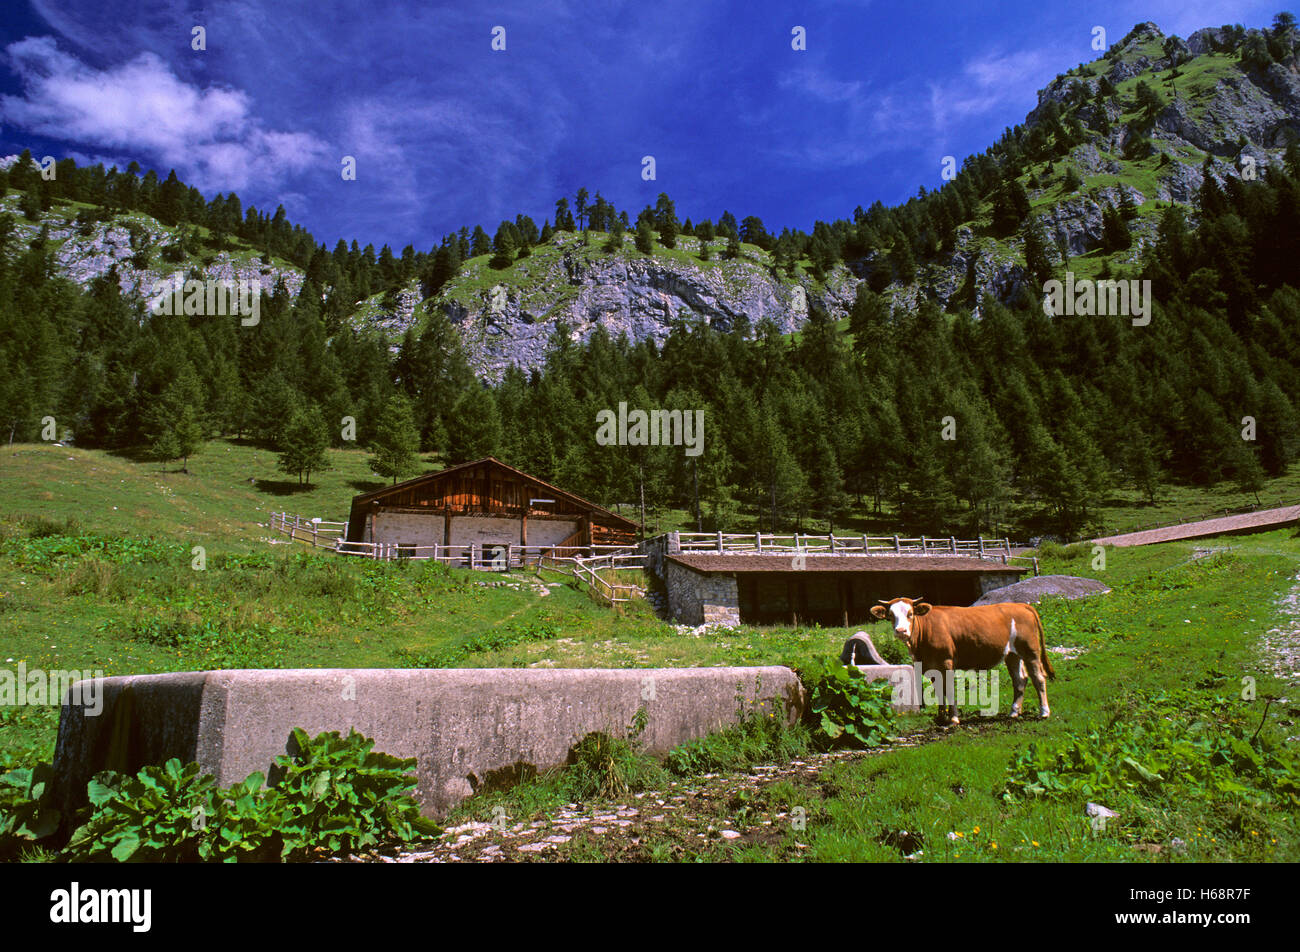 Mucca vicino a una fontana, la Carnia, Dolomiti Friulane parco naturale, Friuli Venezia Giulia, Italia Foto Stock